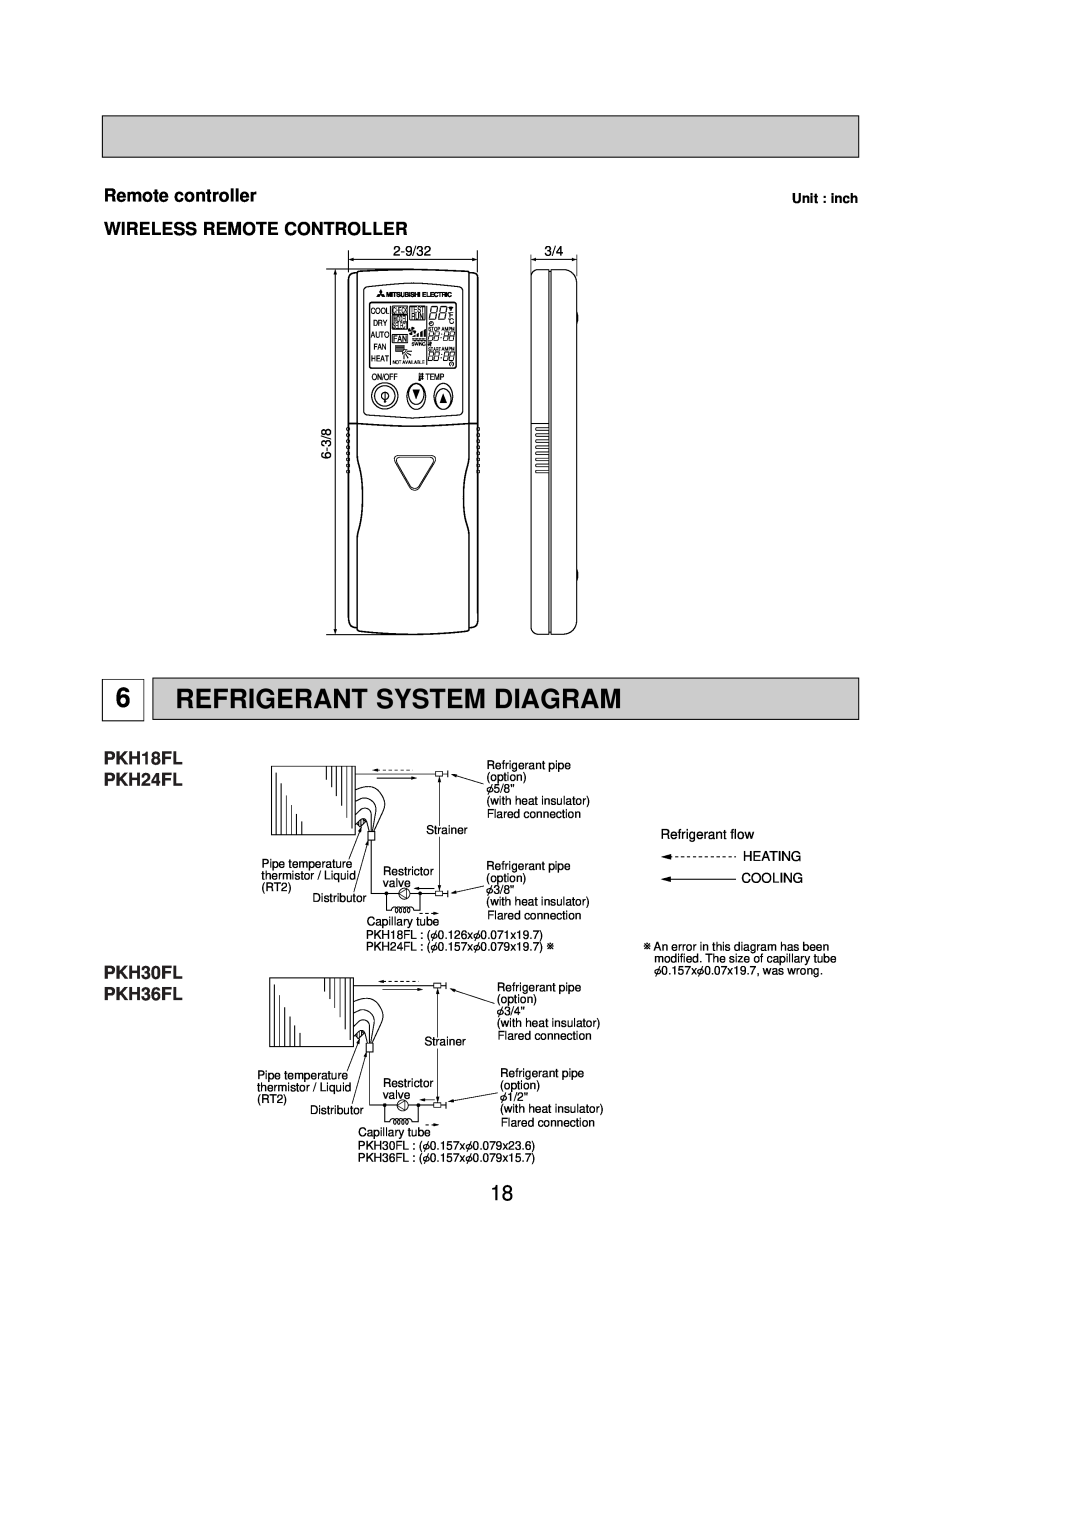 Mitsubishi Electronics PKH30FL Refrigerant System Diagram, Remote controller WIRELESS REMOTE CONTROLLER, Unit inch 